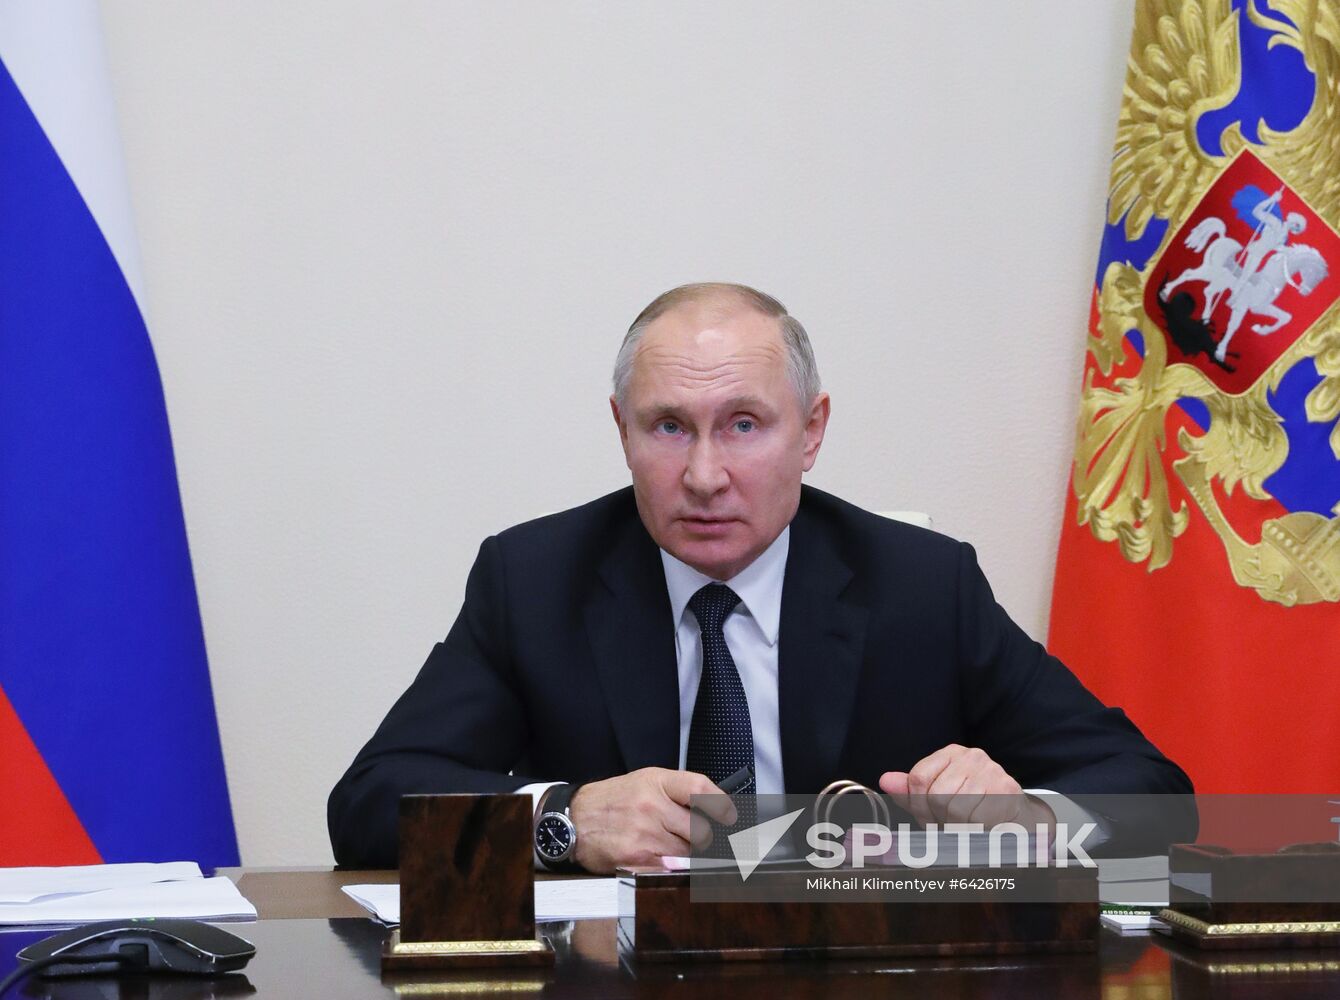 Russia Putin New State Council